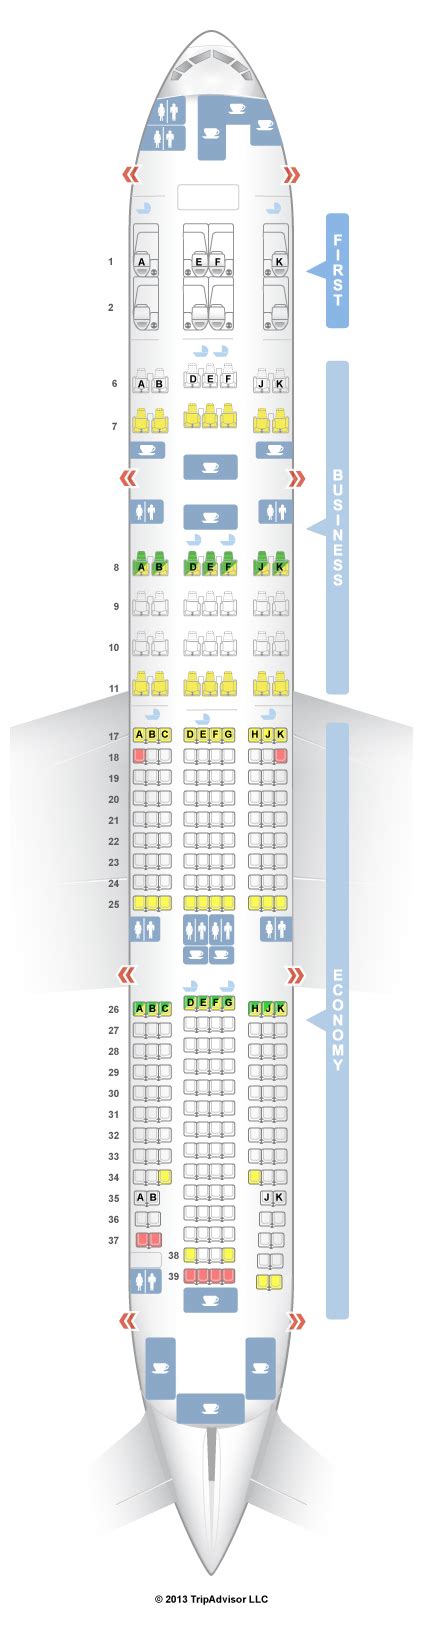 emirates boeing 777 seating chart